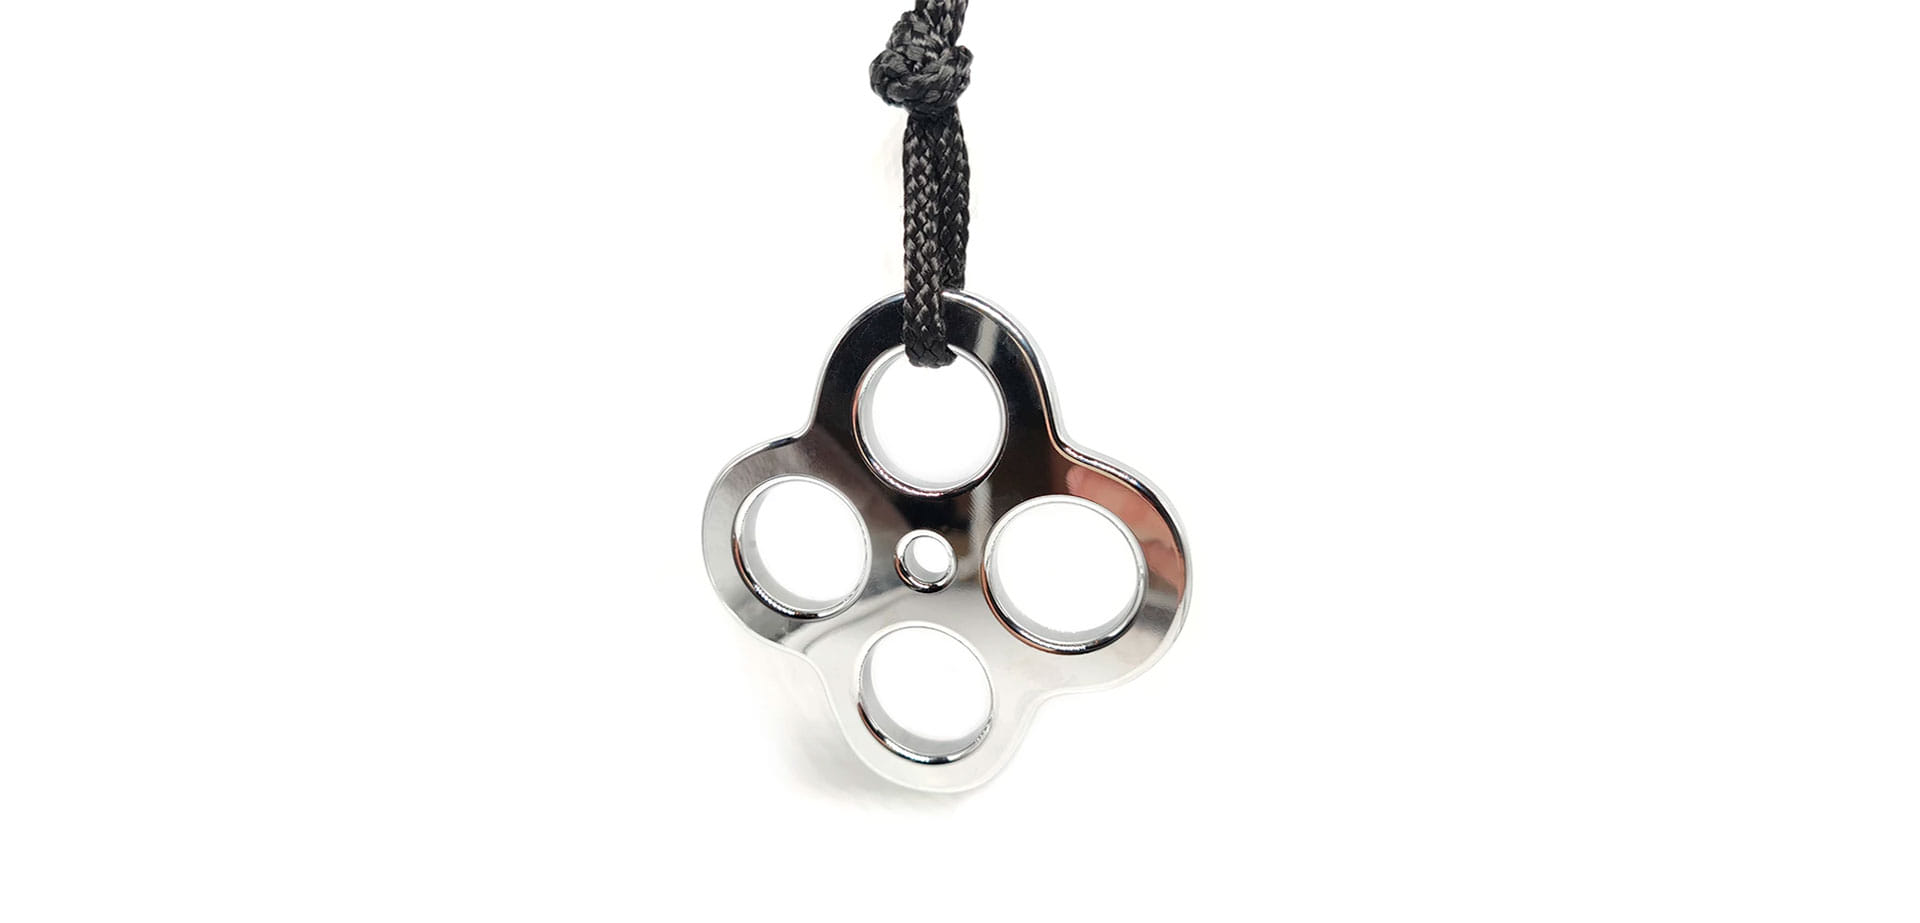 Metal Shibari Rope Bondage Ring.